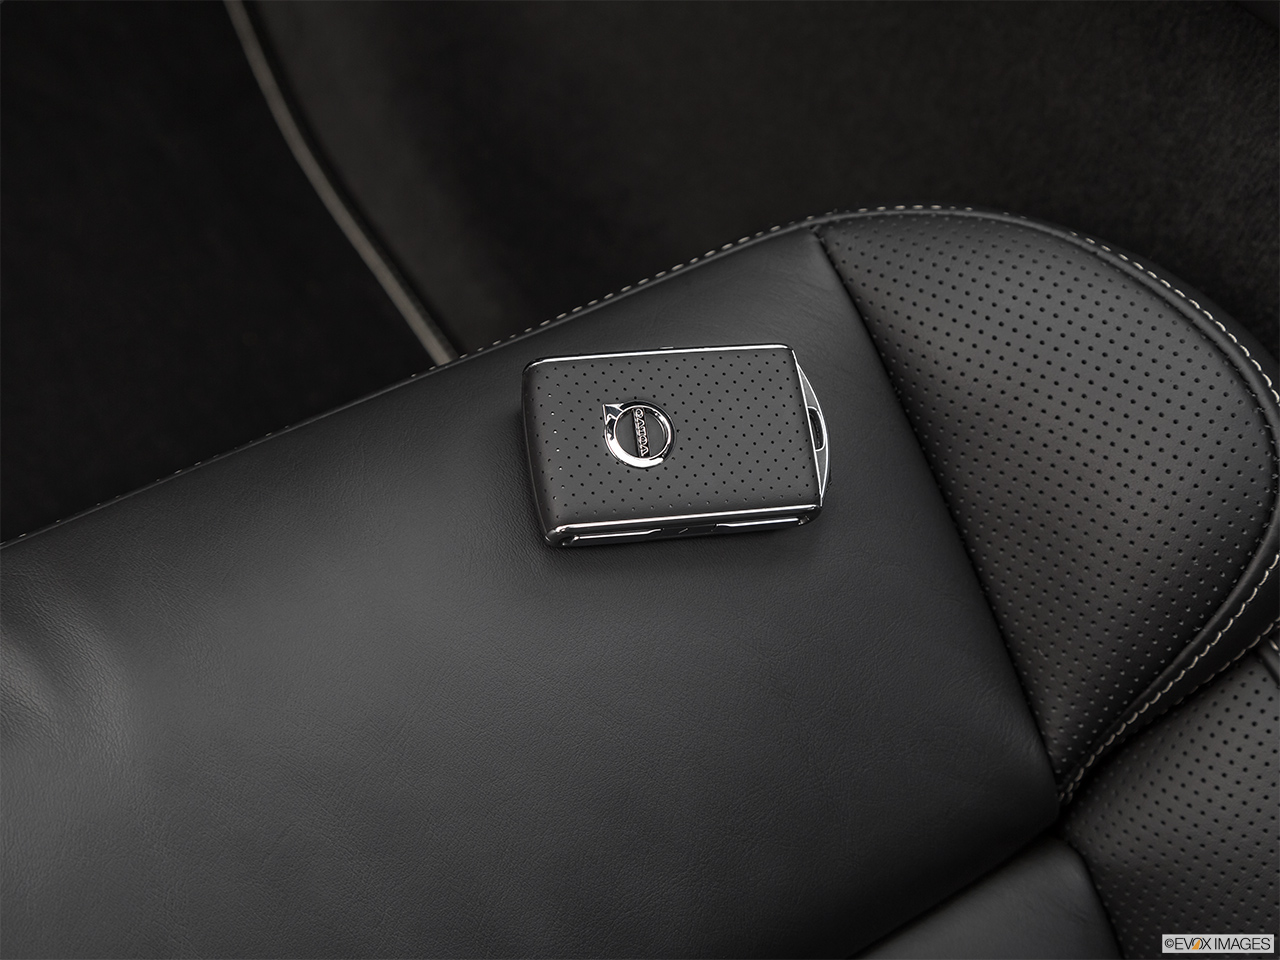 2019 Volvo V90 T5 R-Design Key fob on driver's seat. 